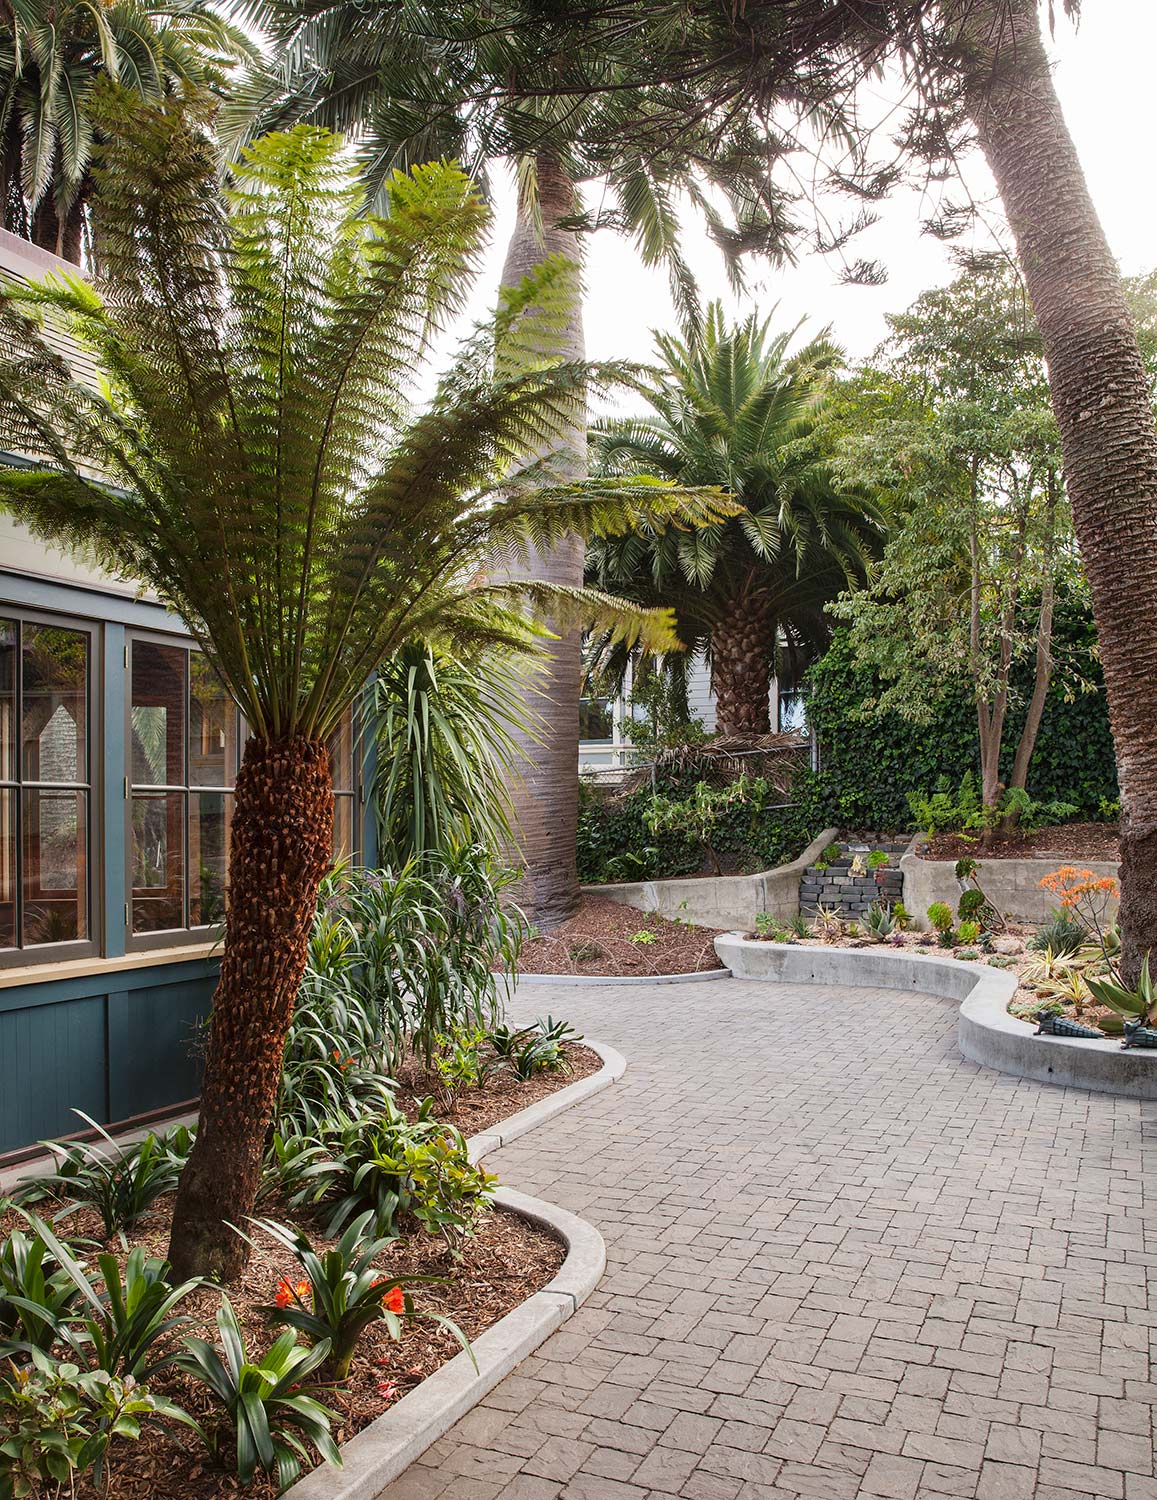   Arterra Landscape Architects  -  Sunnyside Conservatory, SF  